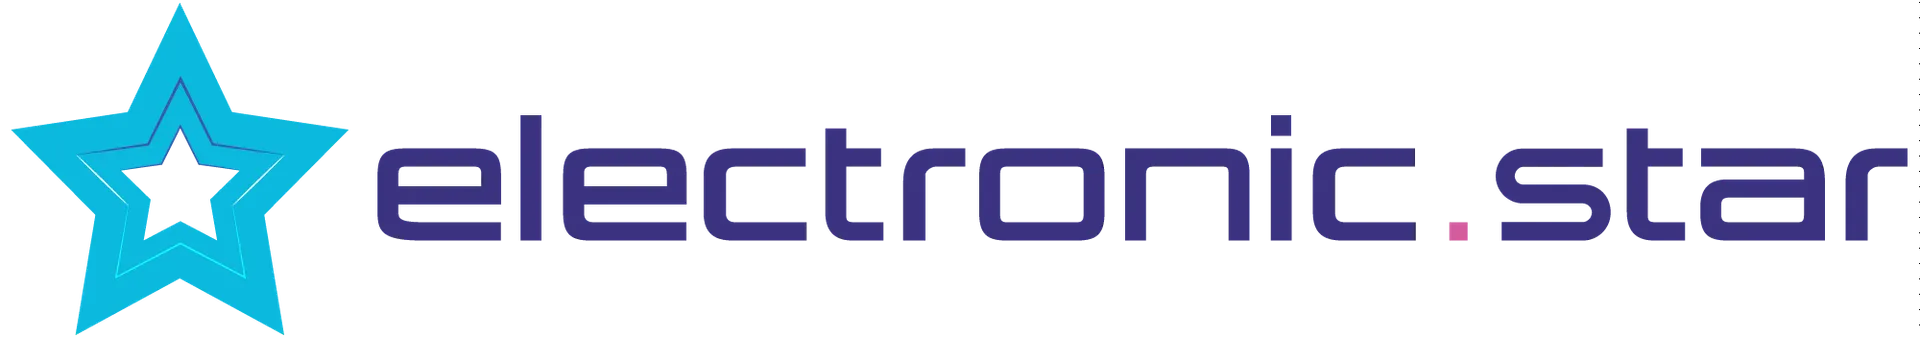 ELECTRONIC STAR logo